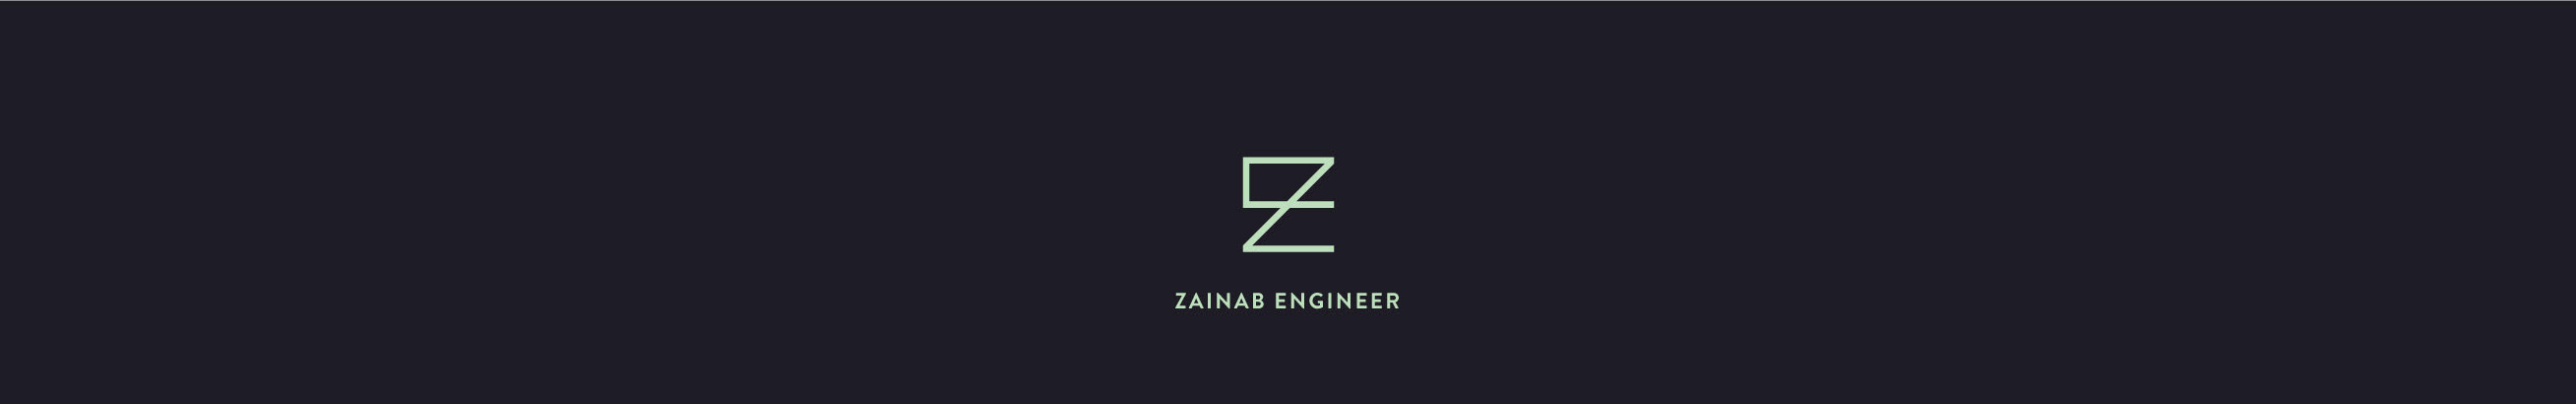 Zainab (Karachiwala) Engineer's profile banner